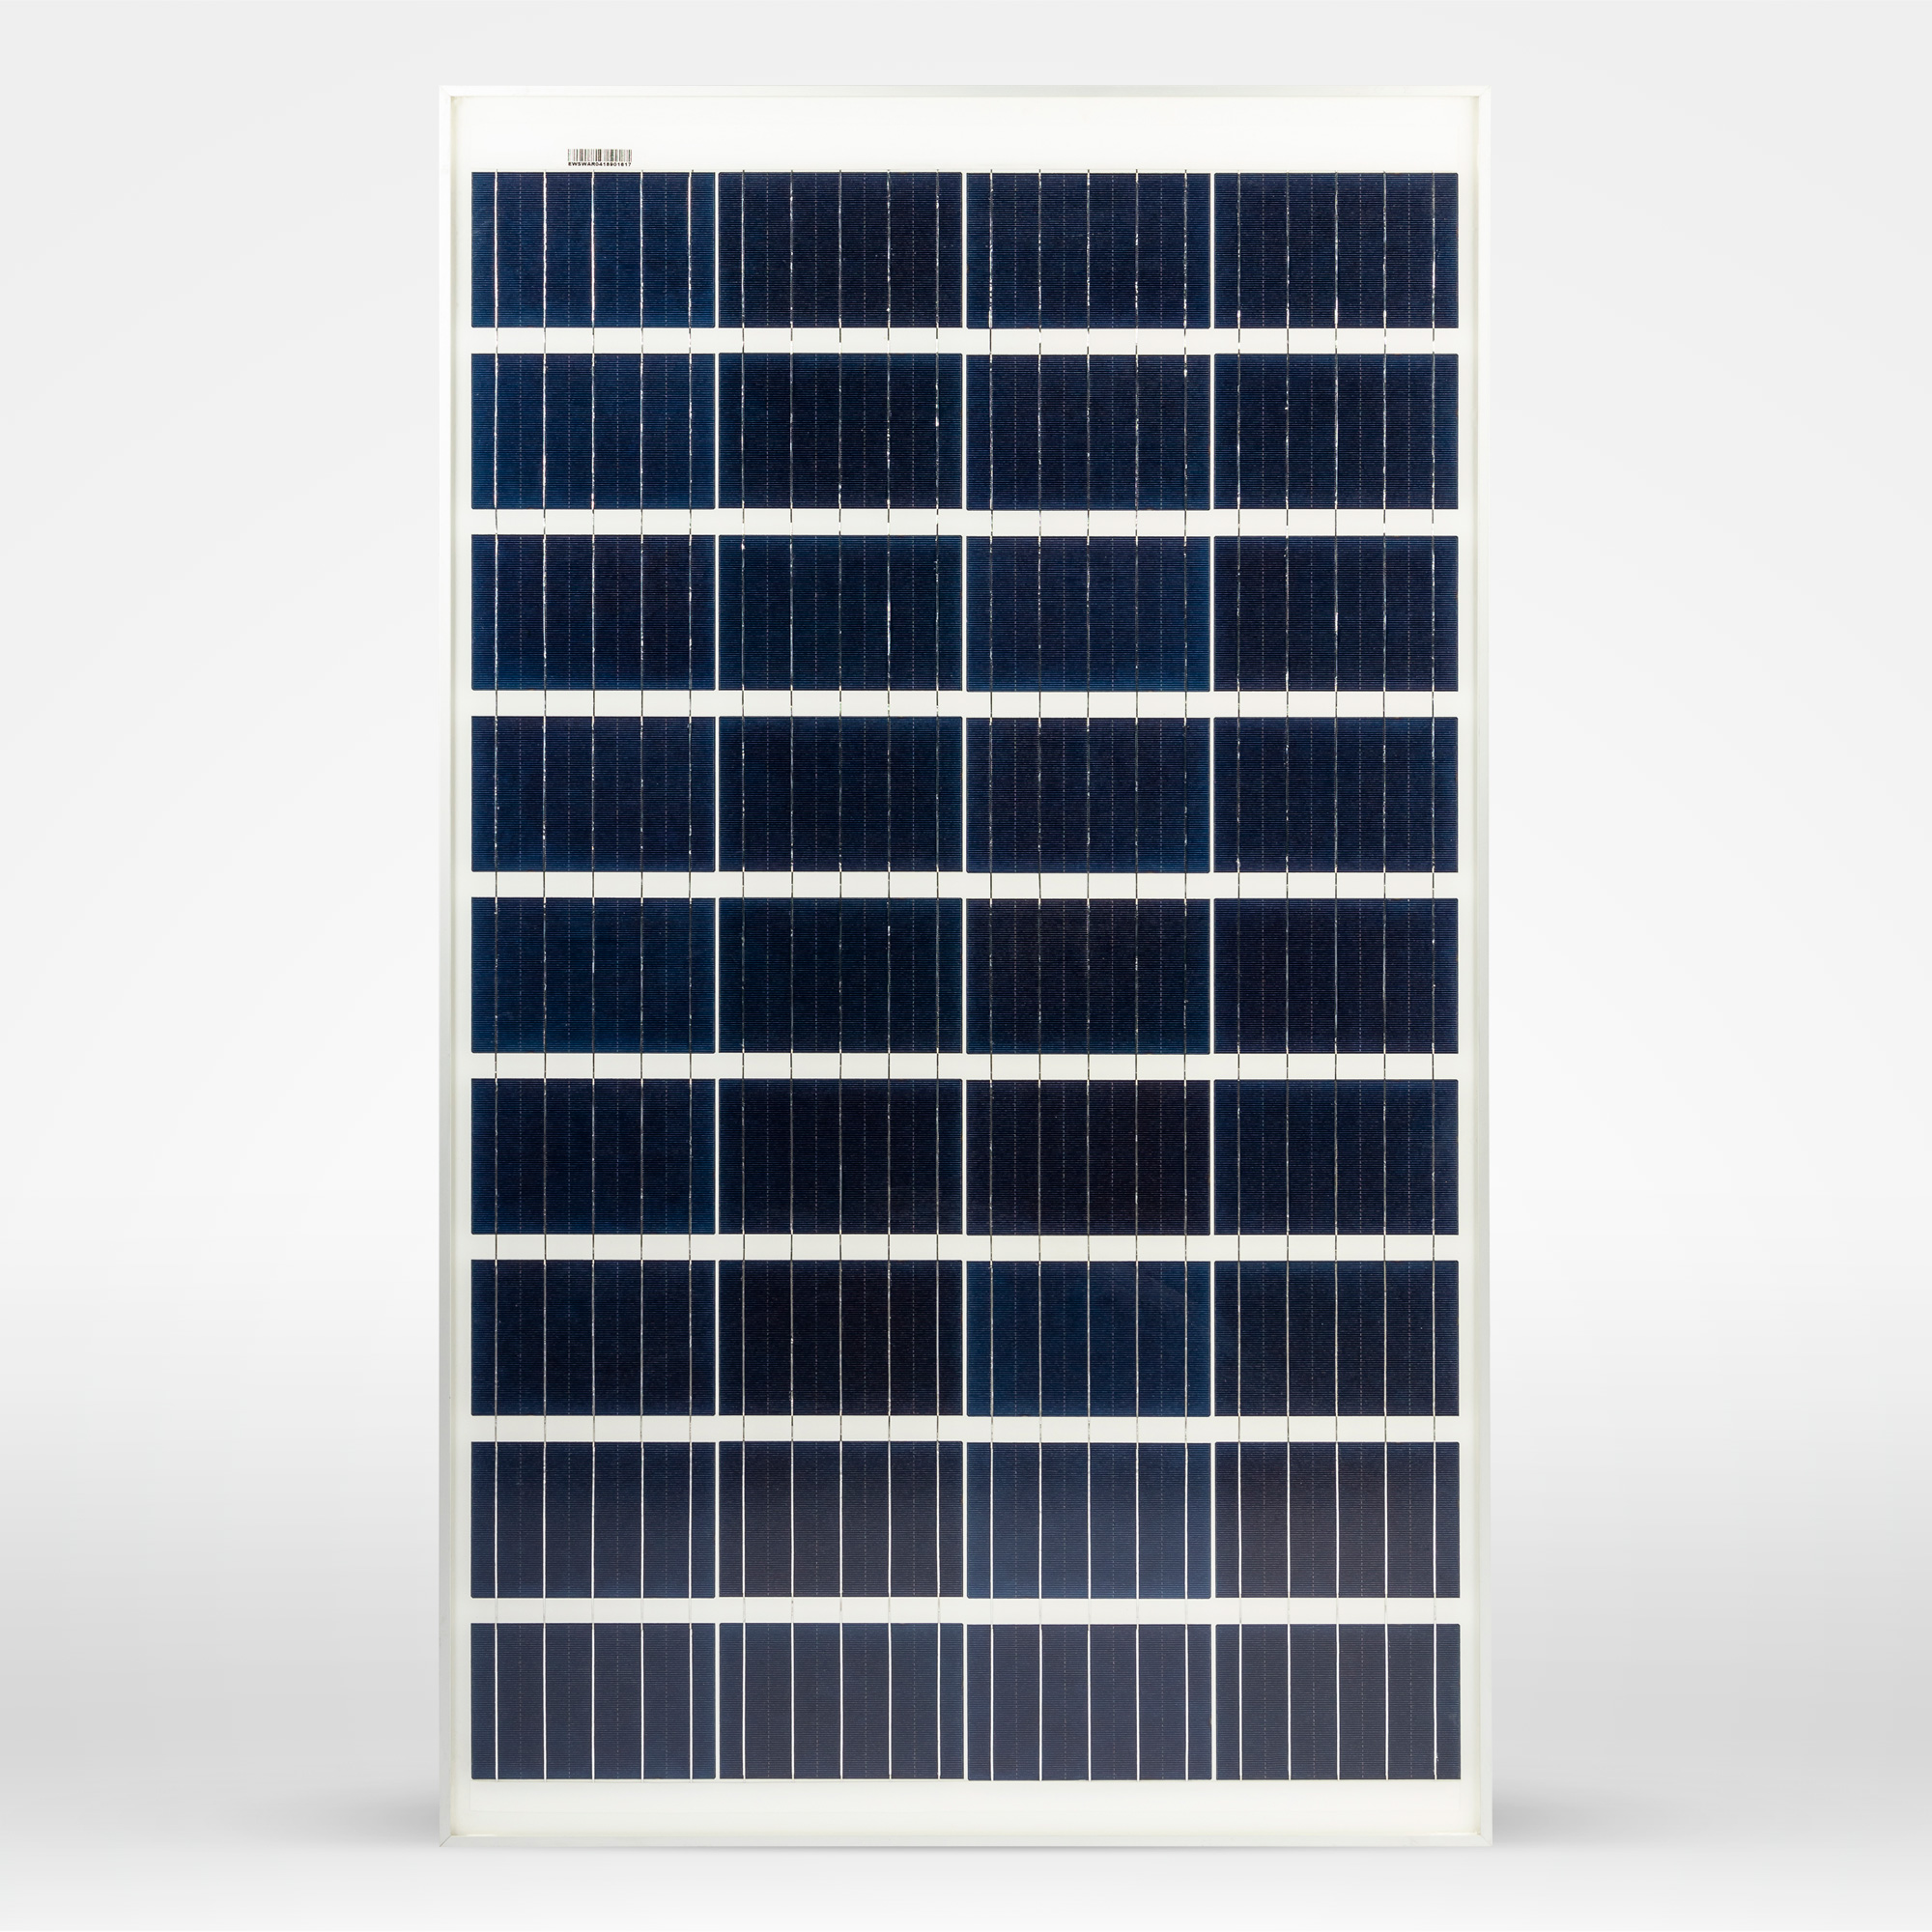 EWS-100P-36-I   Panneau solaire polycristallin 100W